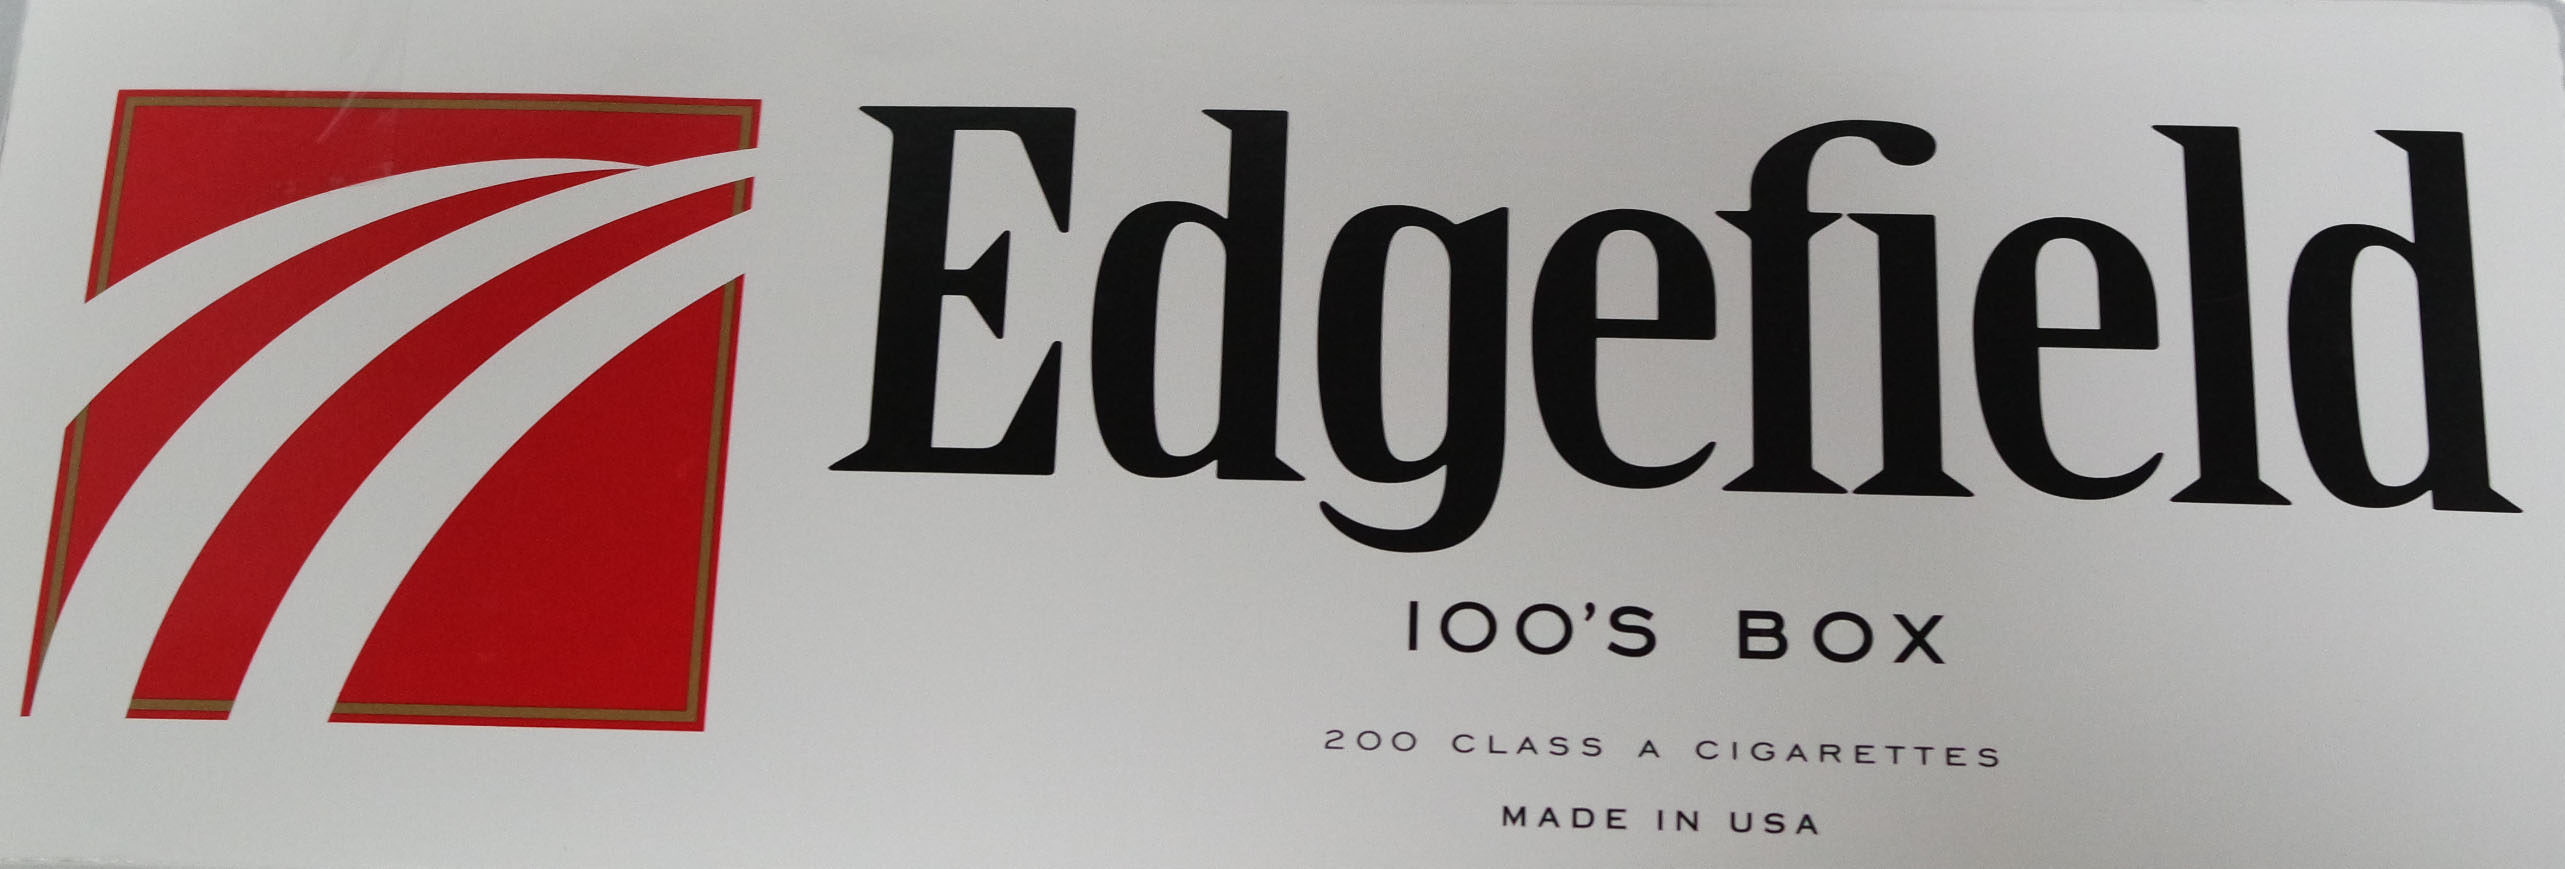 Edgefield red 100 box